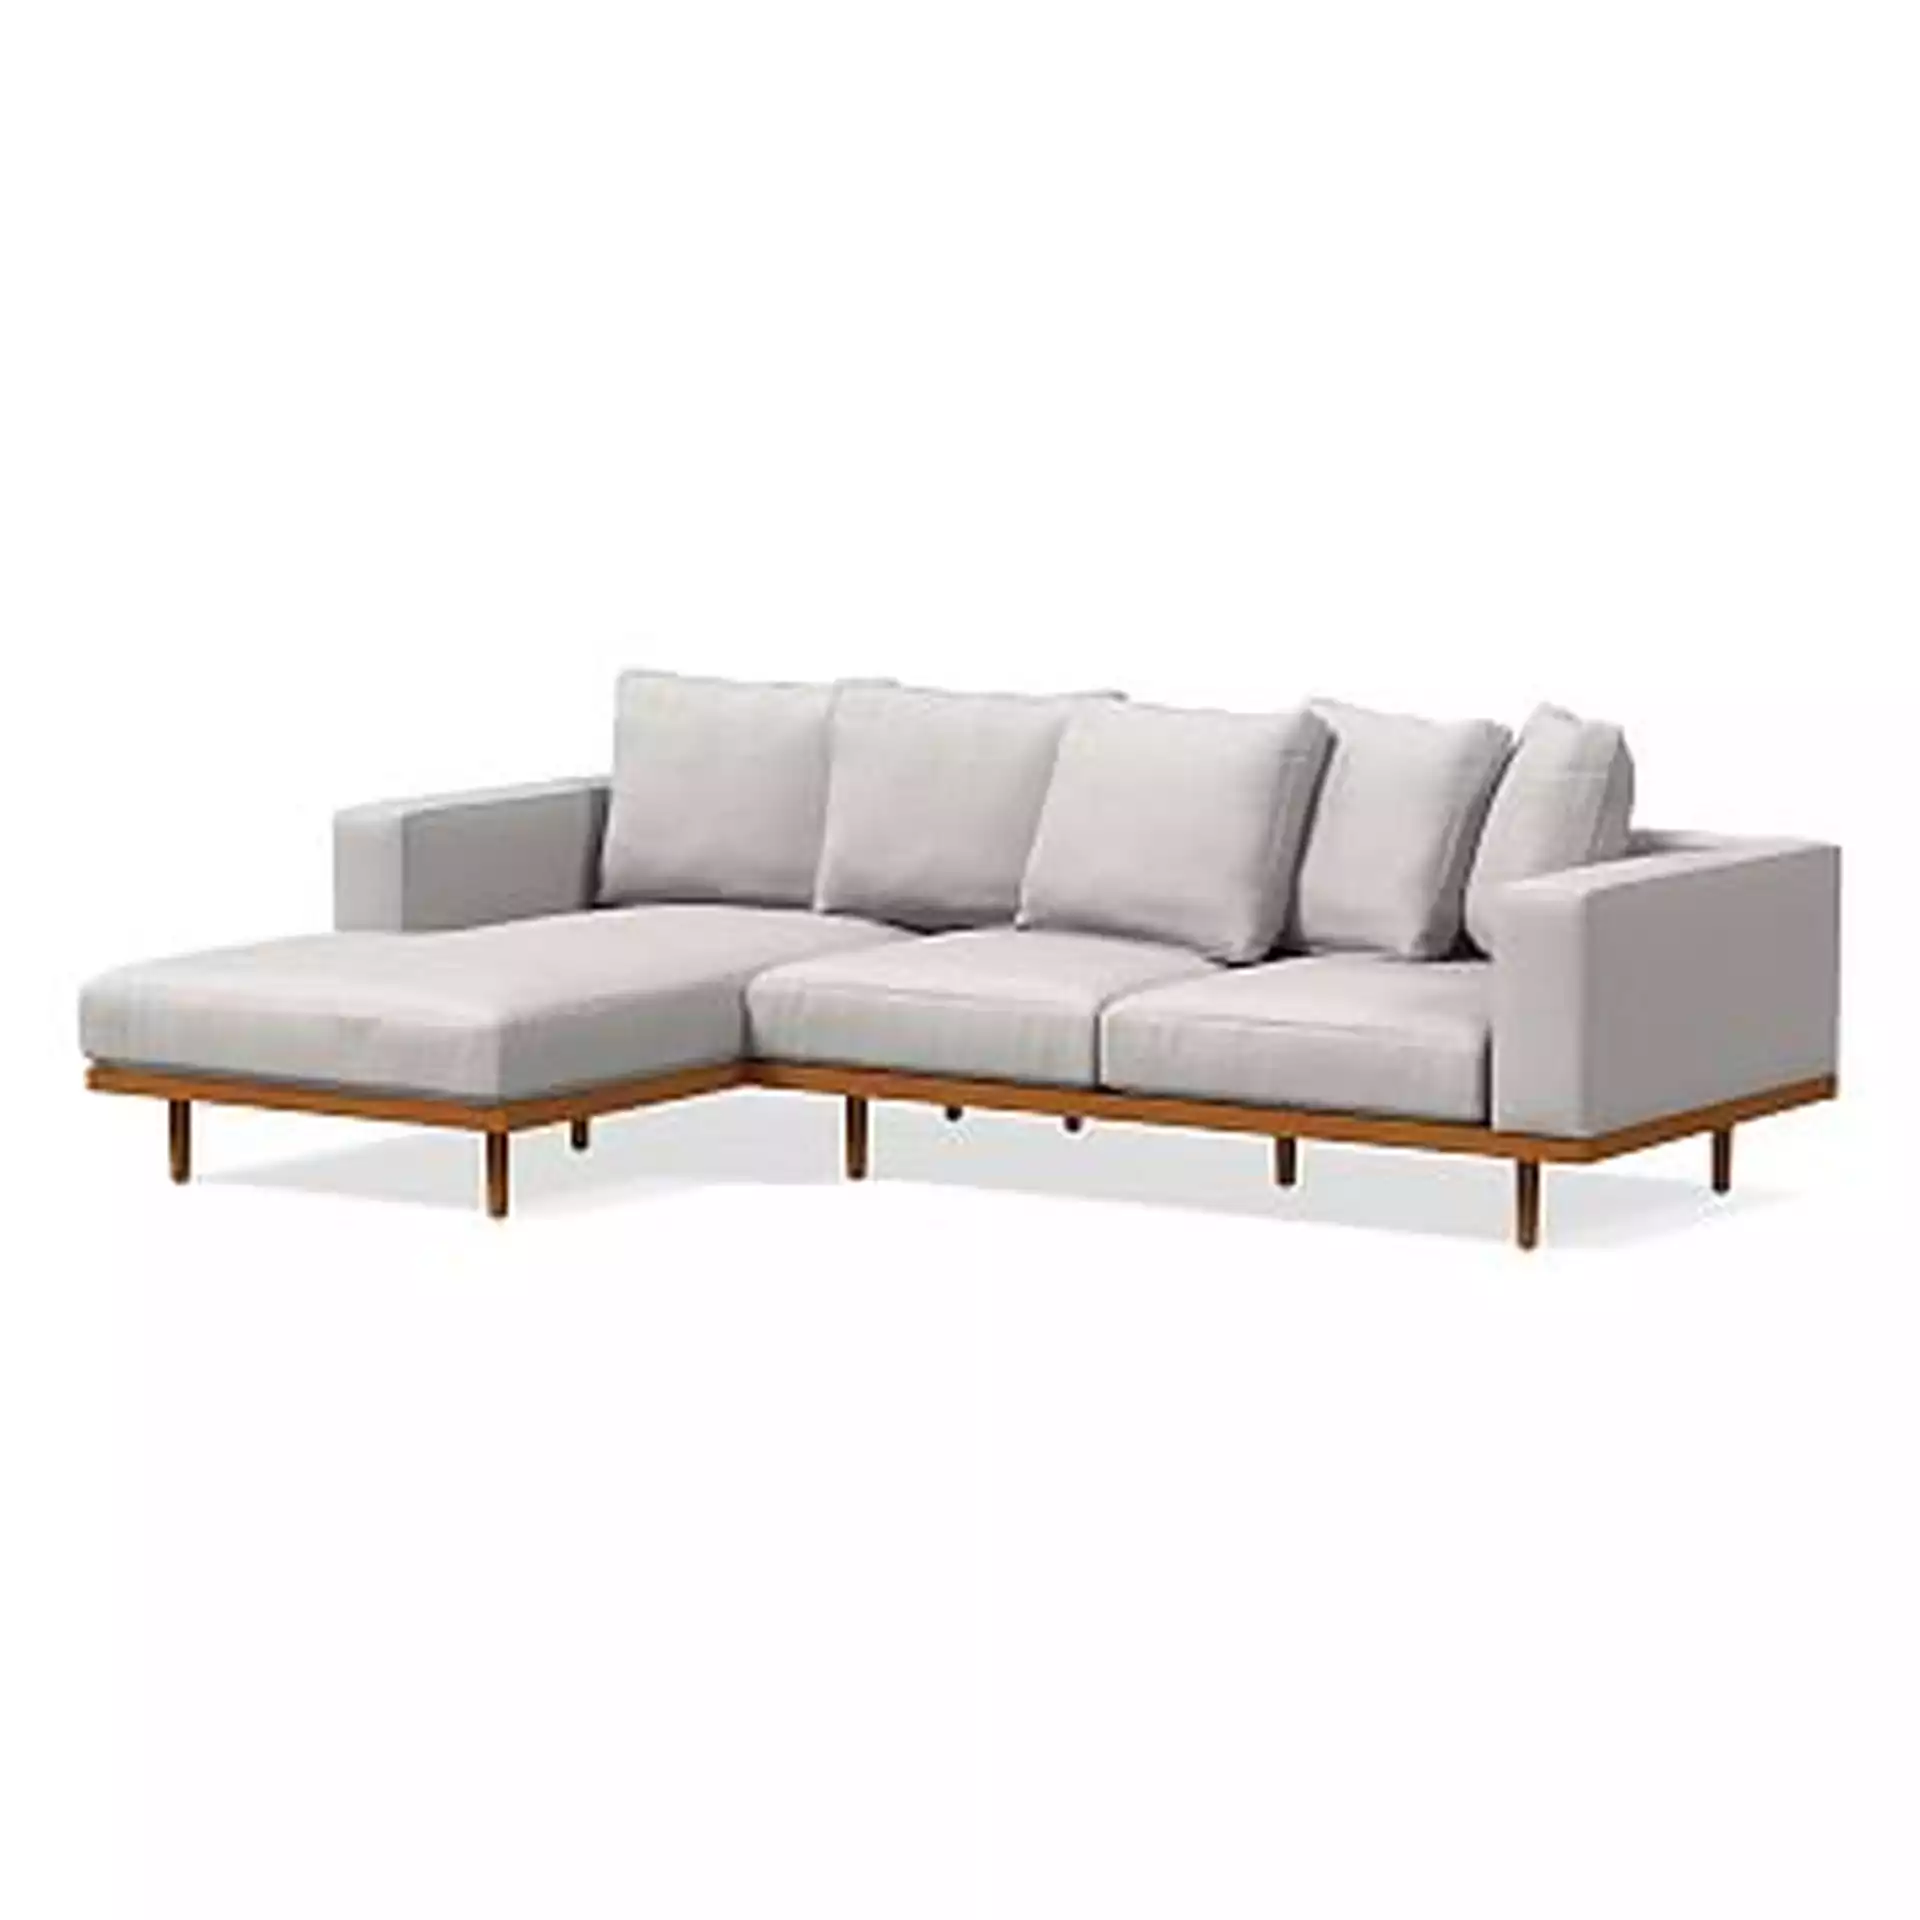 Newport Sectional Set 02: Right Arm Sofa, Left Arm Chaise Toss Back Cushion, Down, Performance Coastal Linen, Dove, Pecan